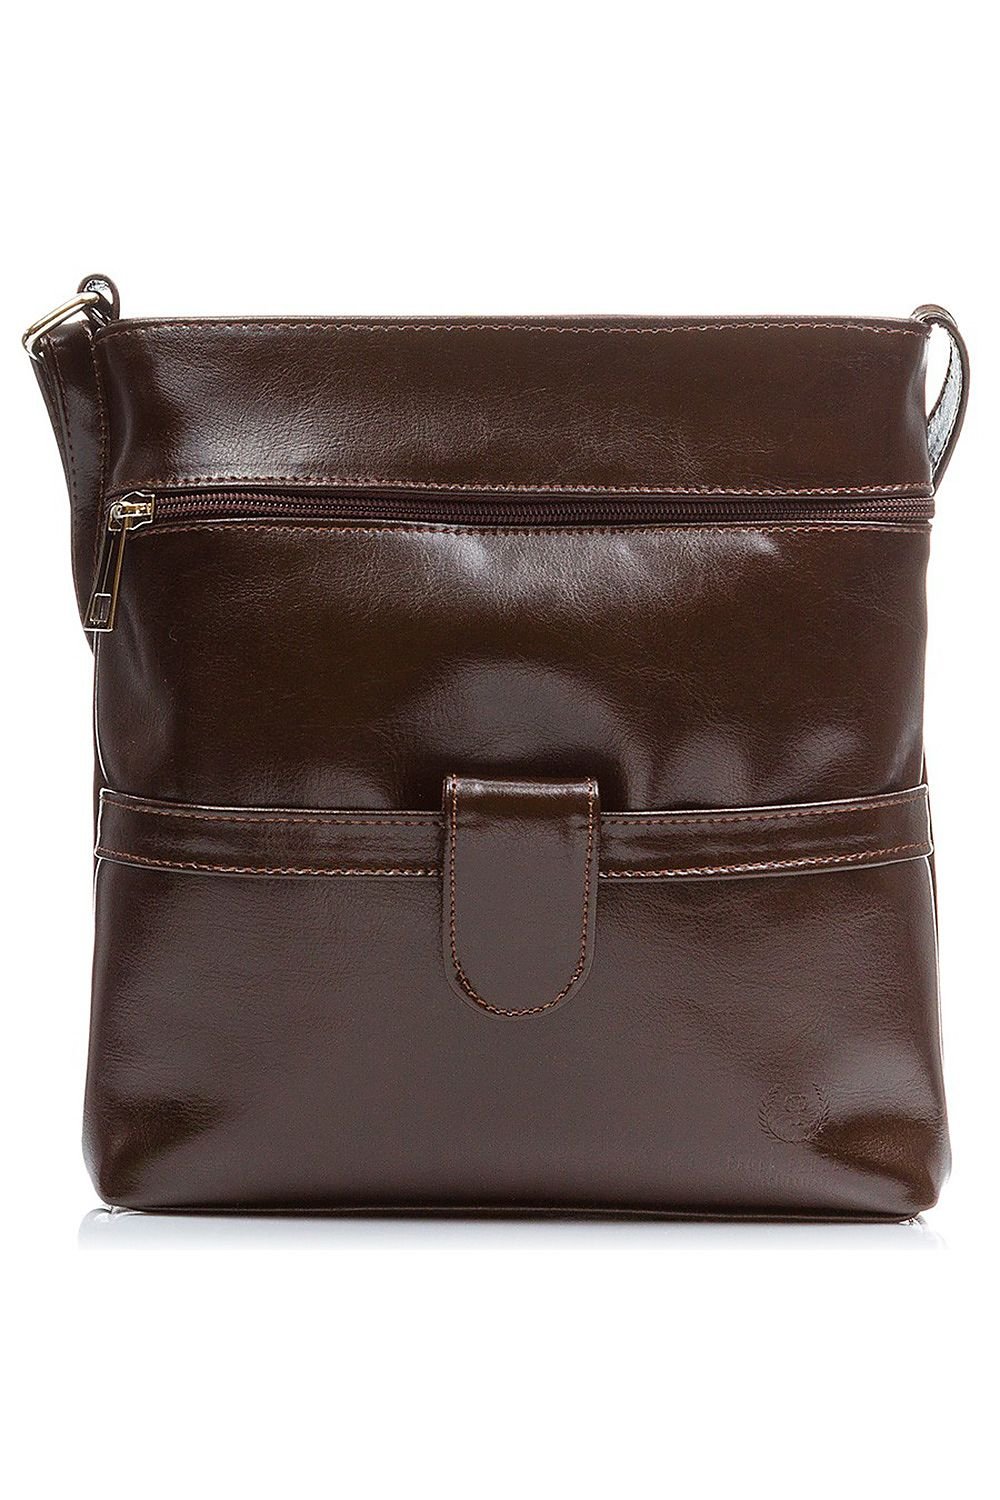 Cadillac Luxury Leather Women Handbag Best - CIAO SOOS